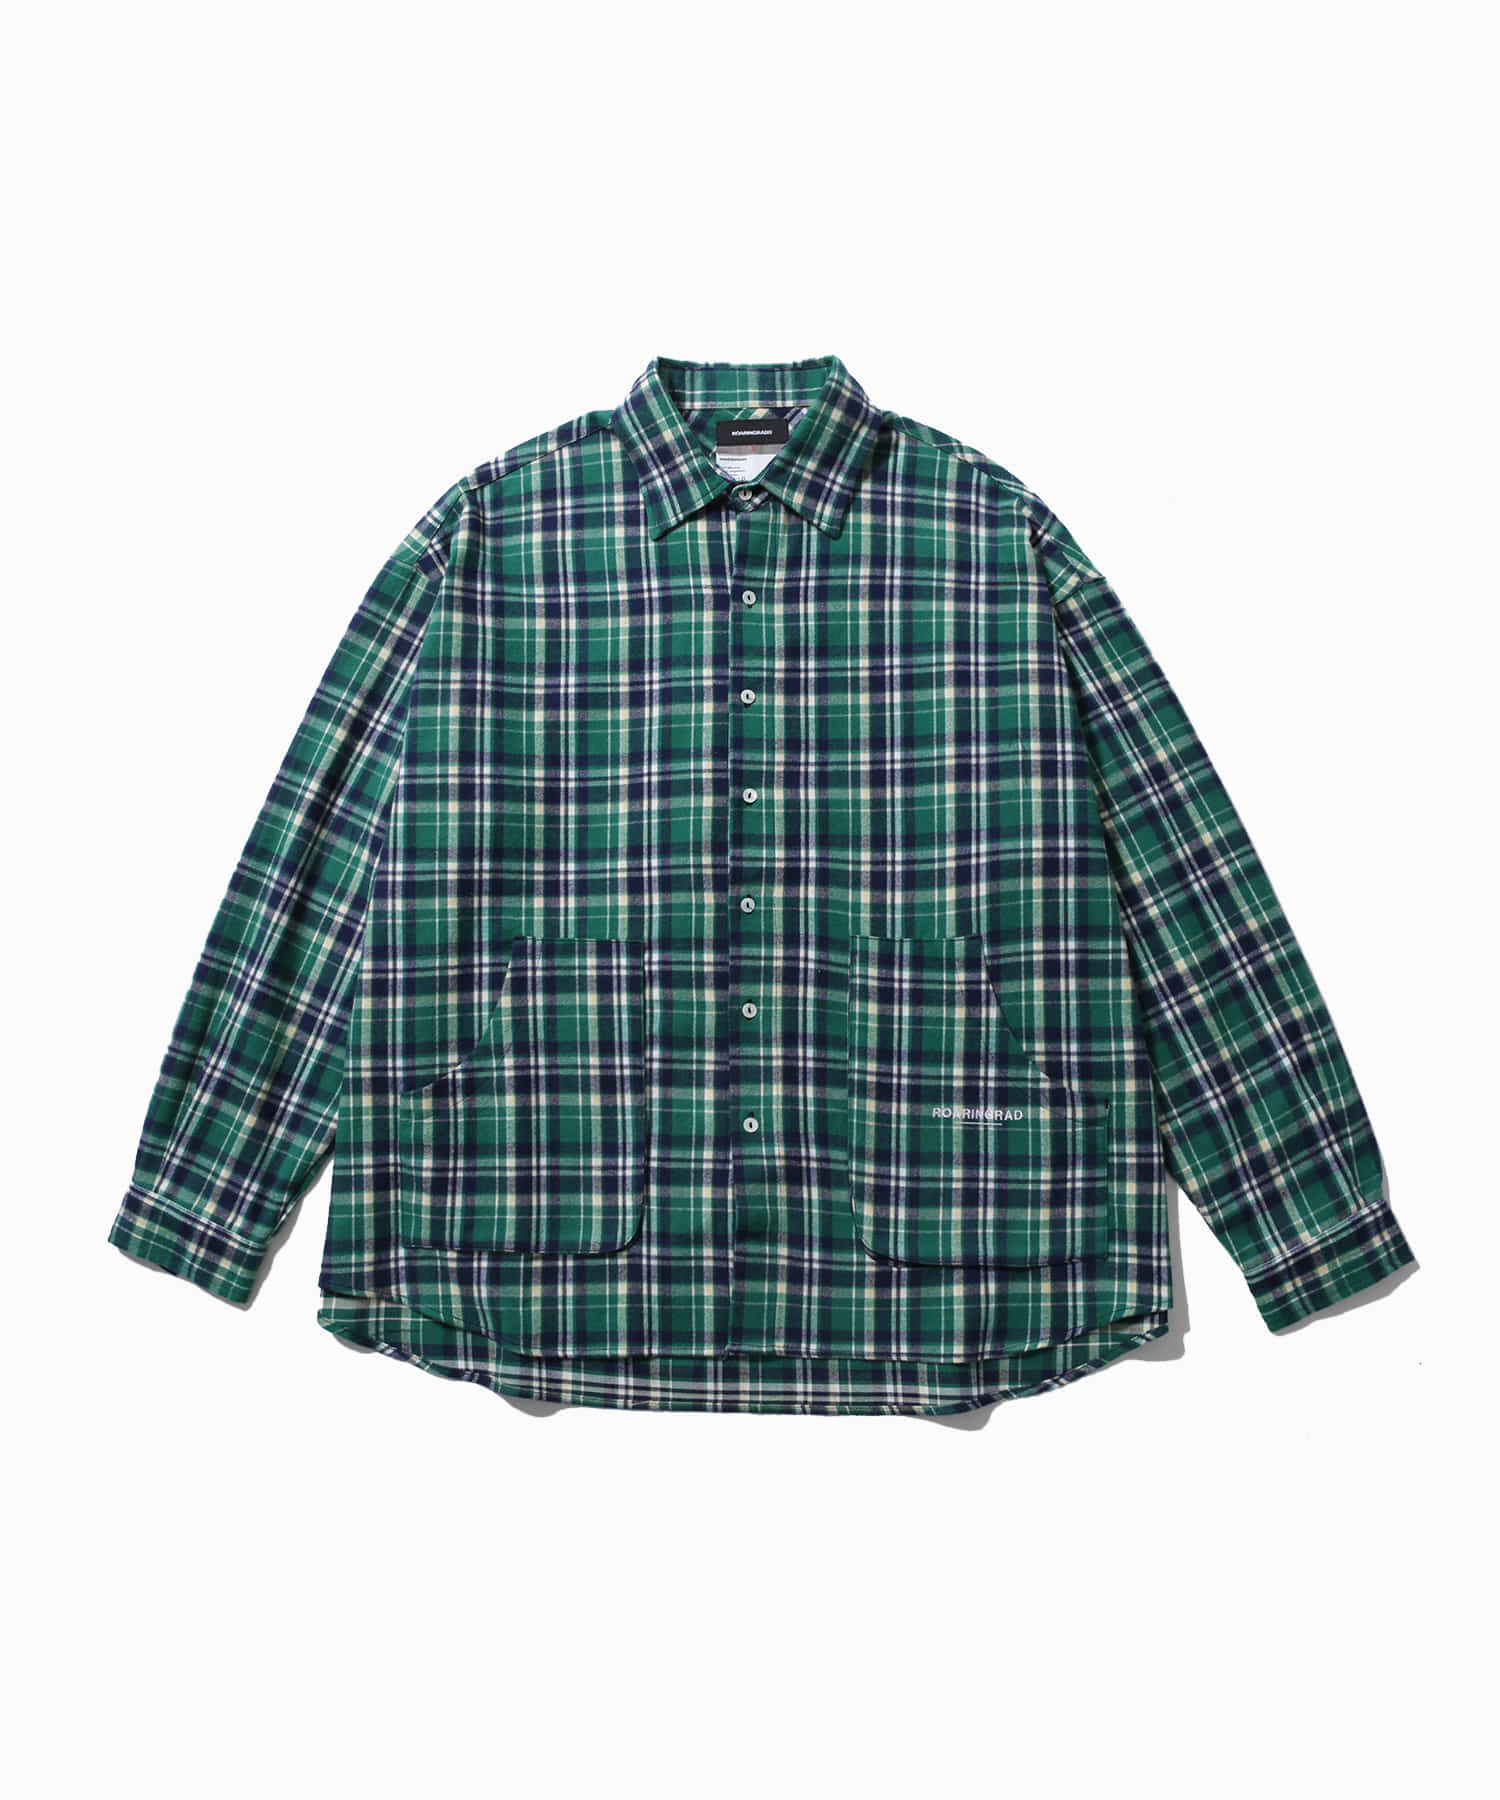 pocket check flannel shirt green - 로어링라드(ROARINGRAD)